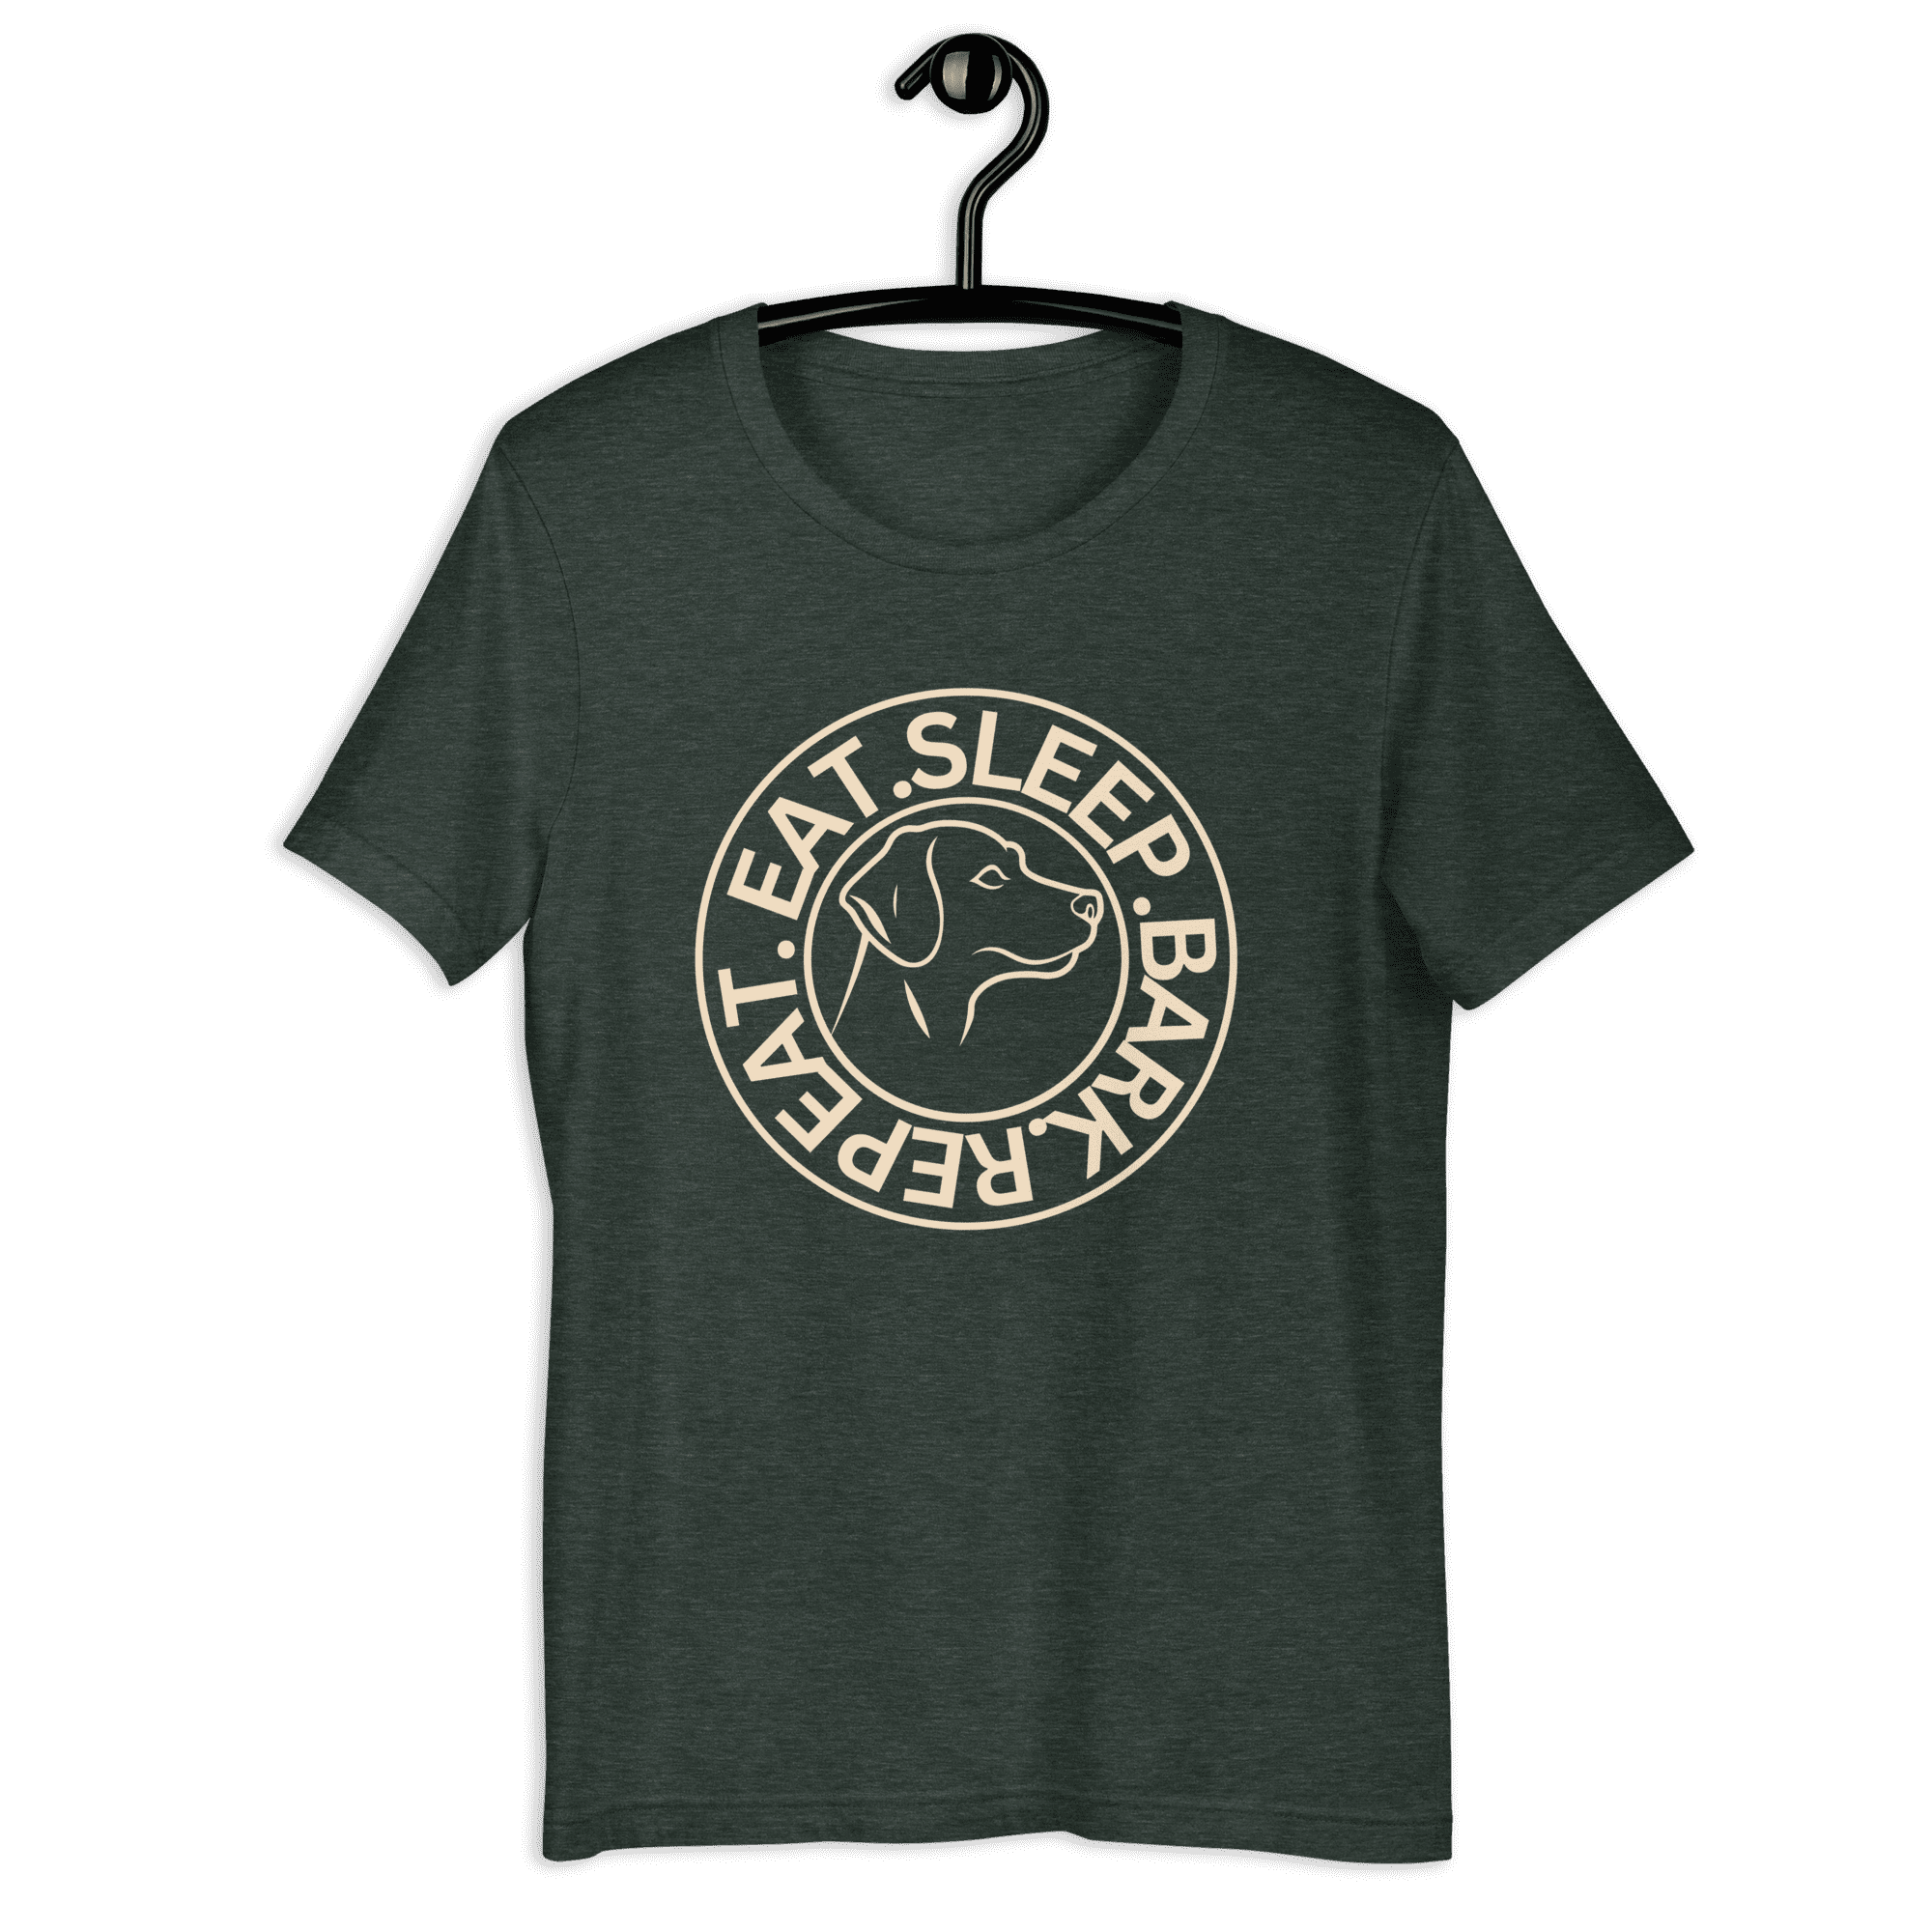 Eat Sleep Bark Repeat Labrador Retriever Unisex T-Shirt. Black